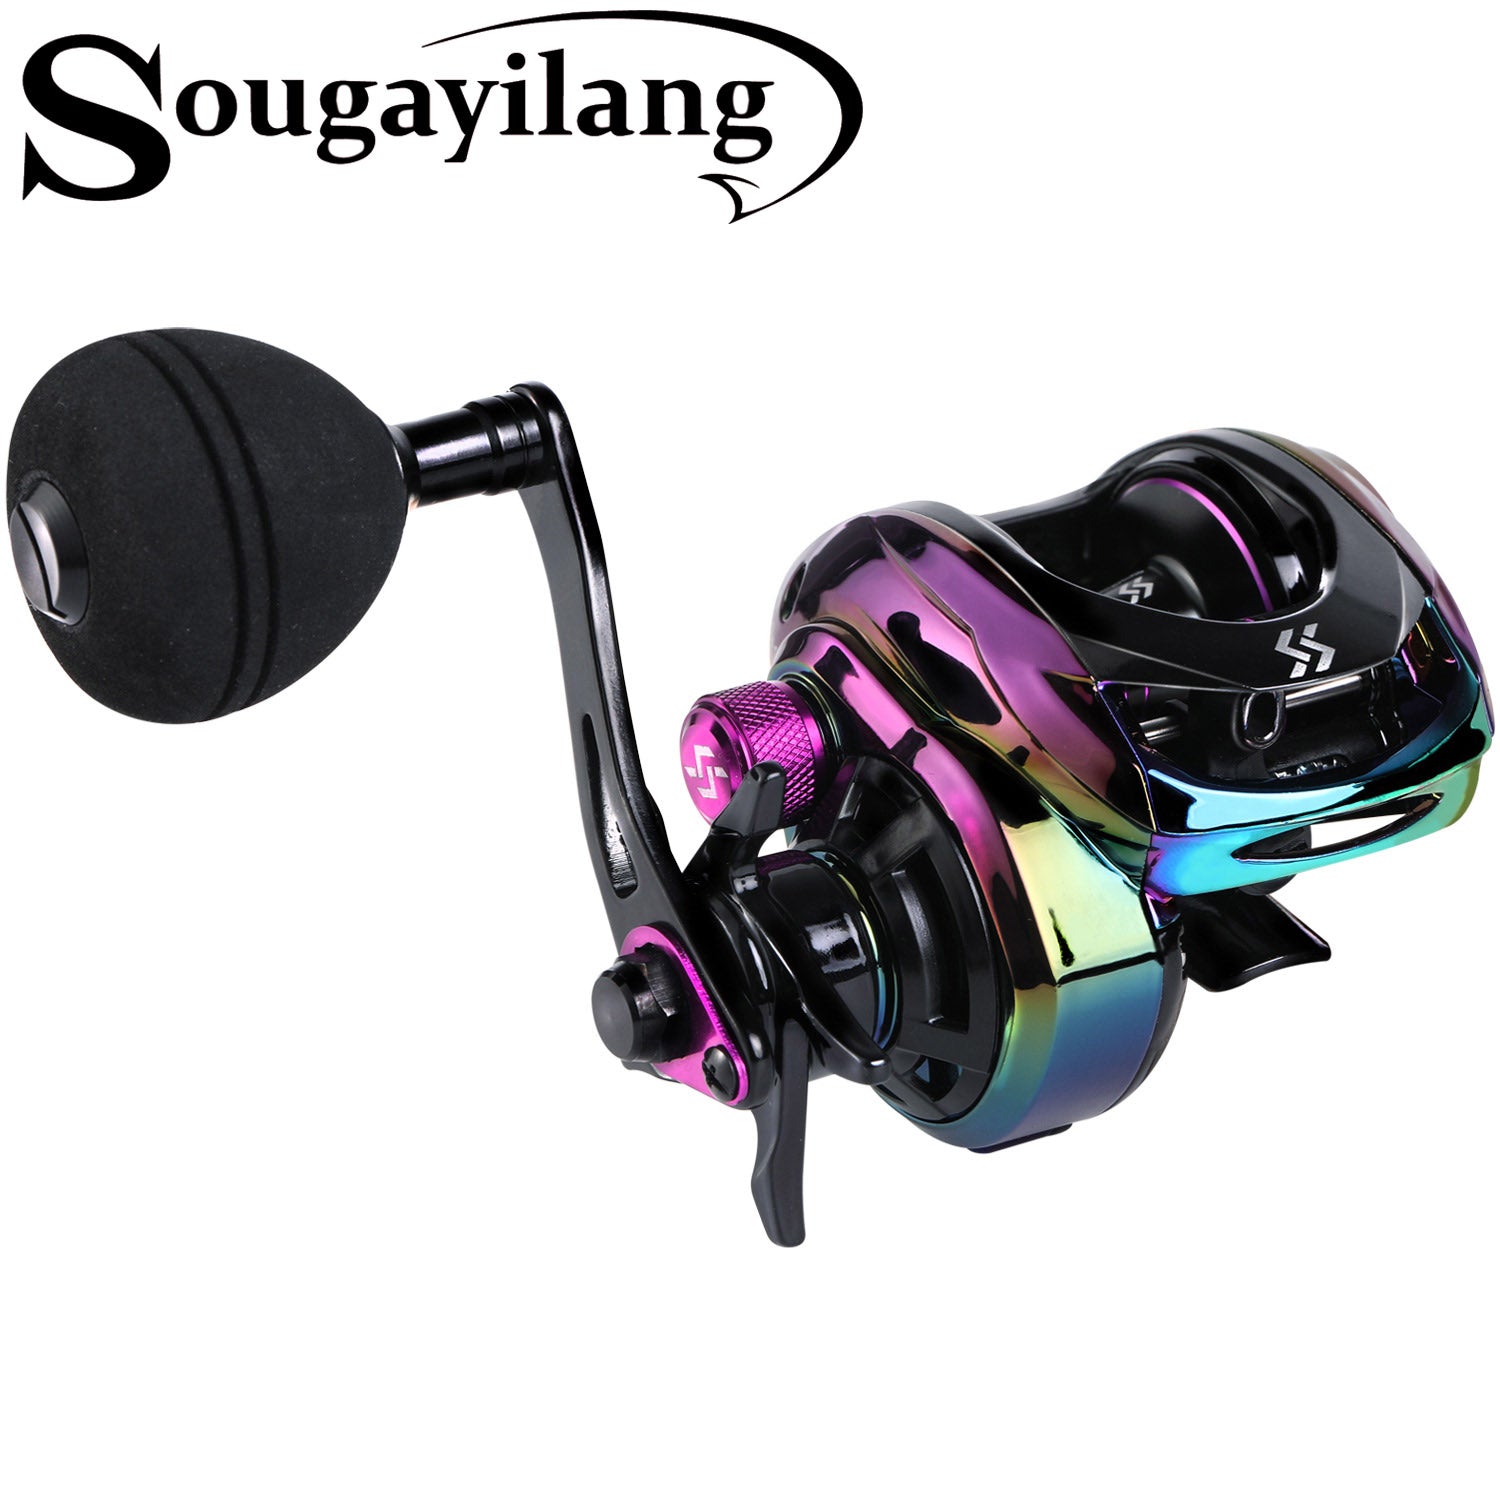 Sougayilang Baitcasting Reels - Colorful Fishing Reel, High Speed